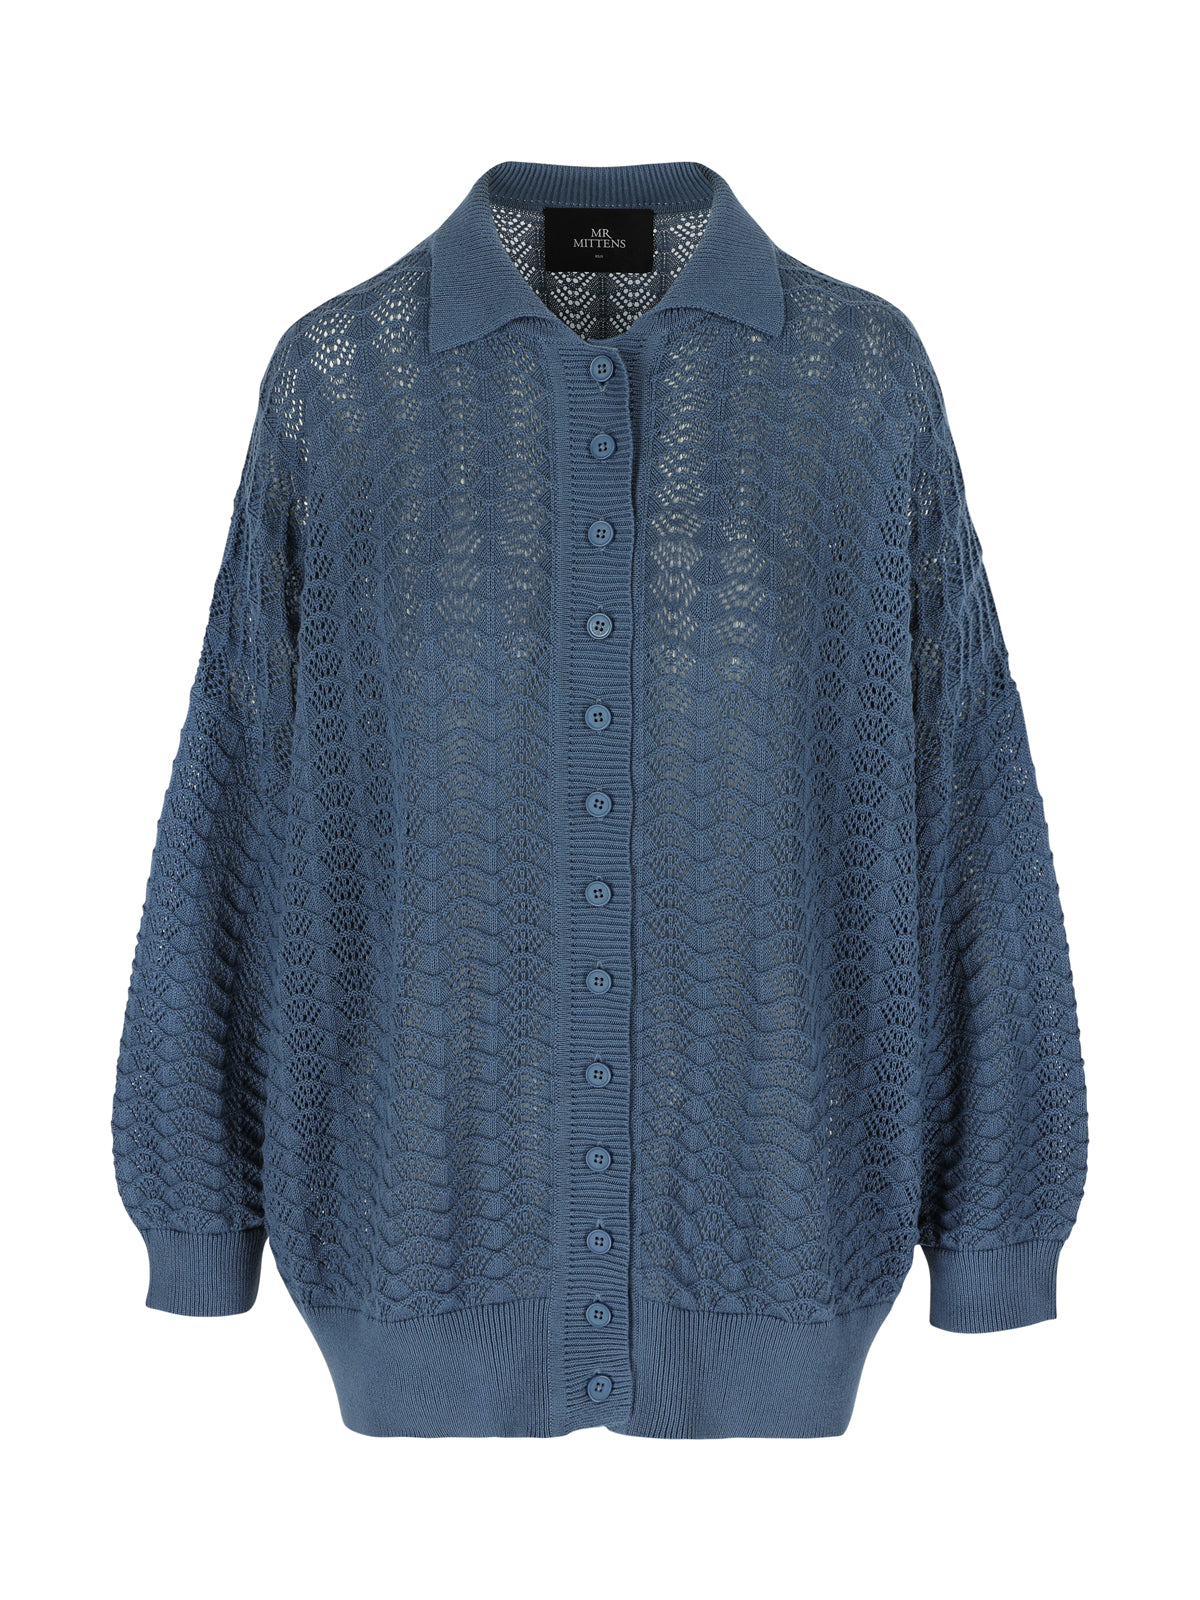 Tali lace buttoned shirt